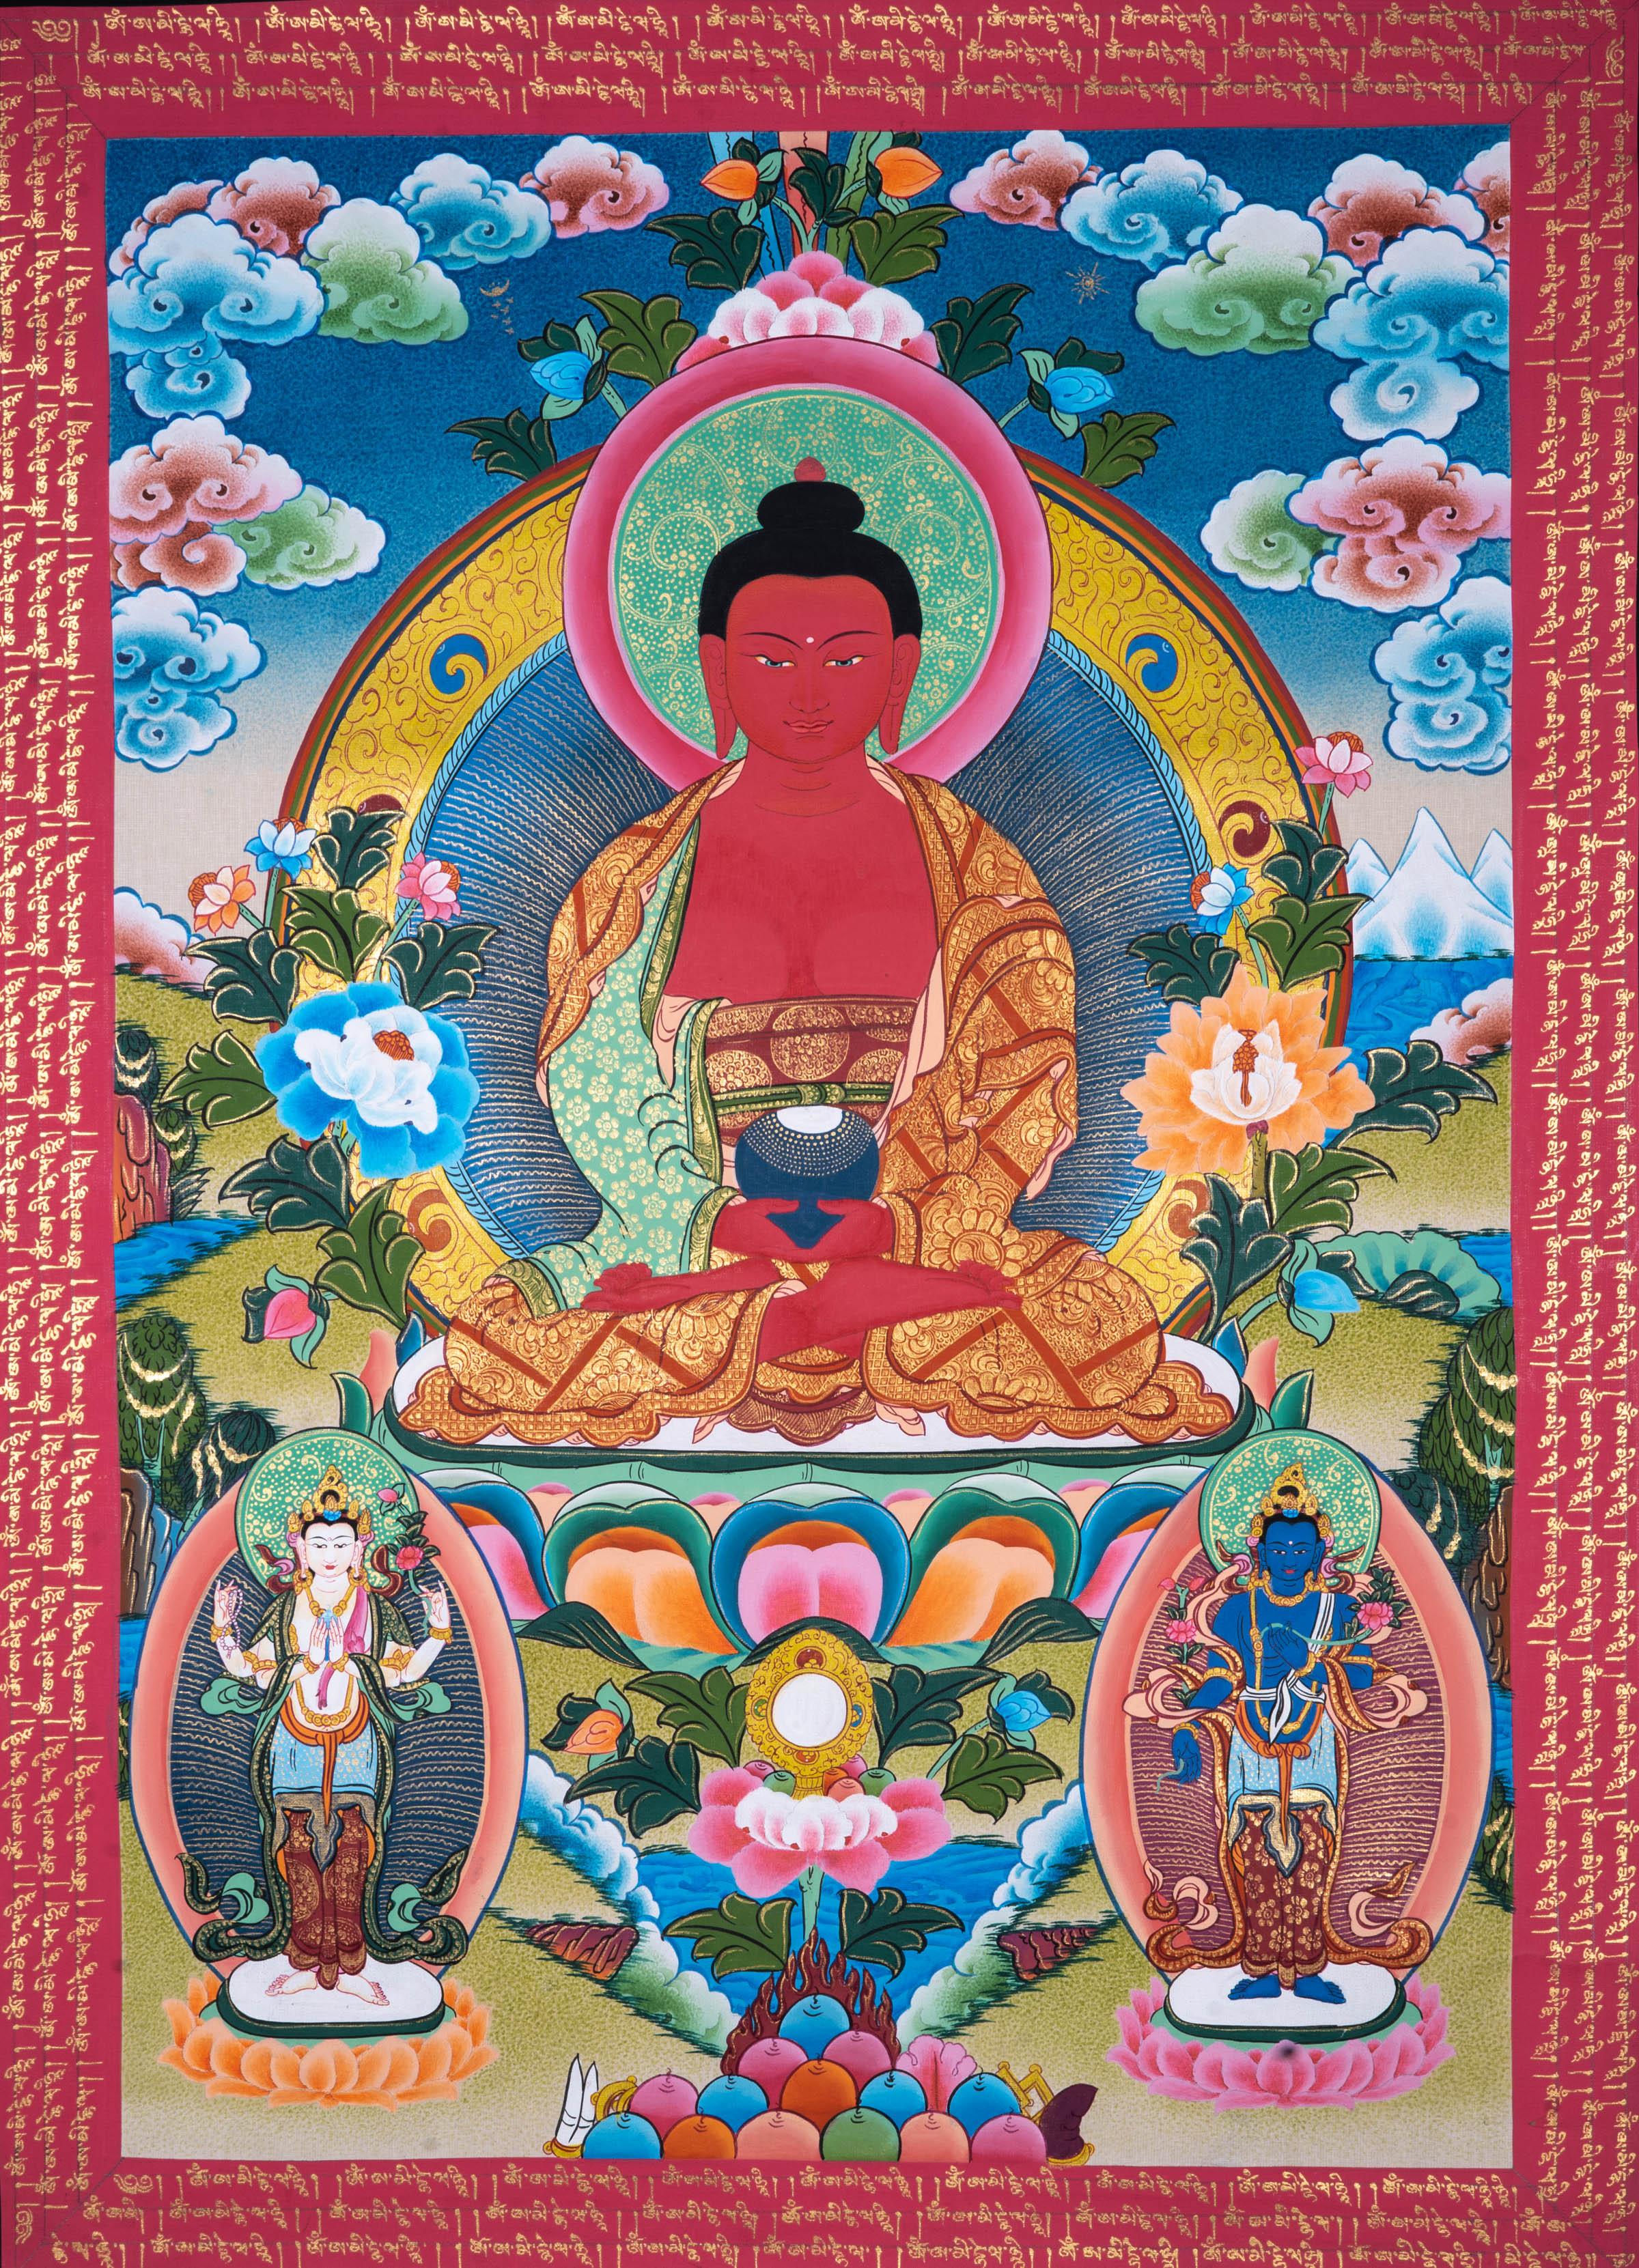 Handmade Amitabha Buddha Thangka painting - Himalayas Shop